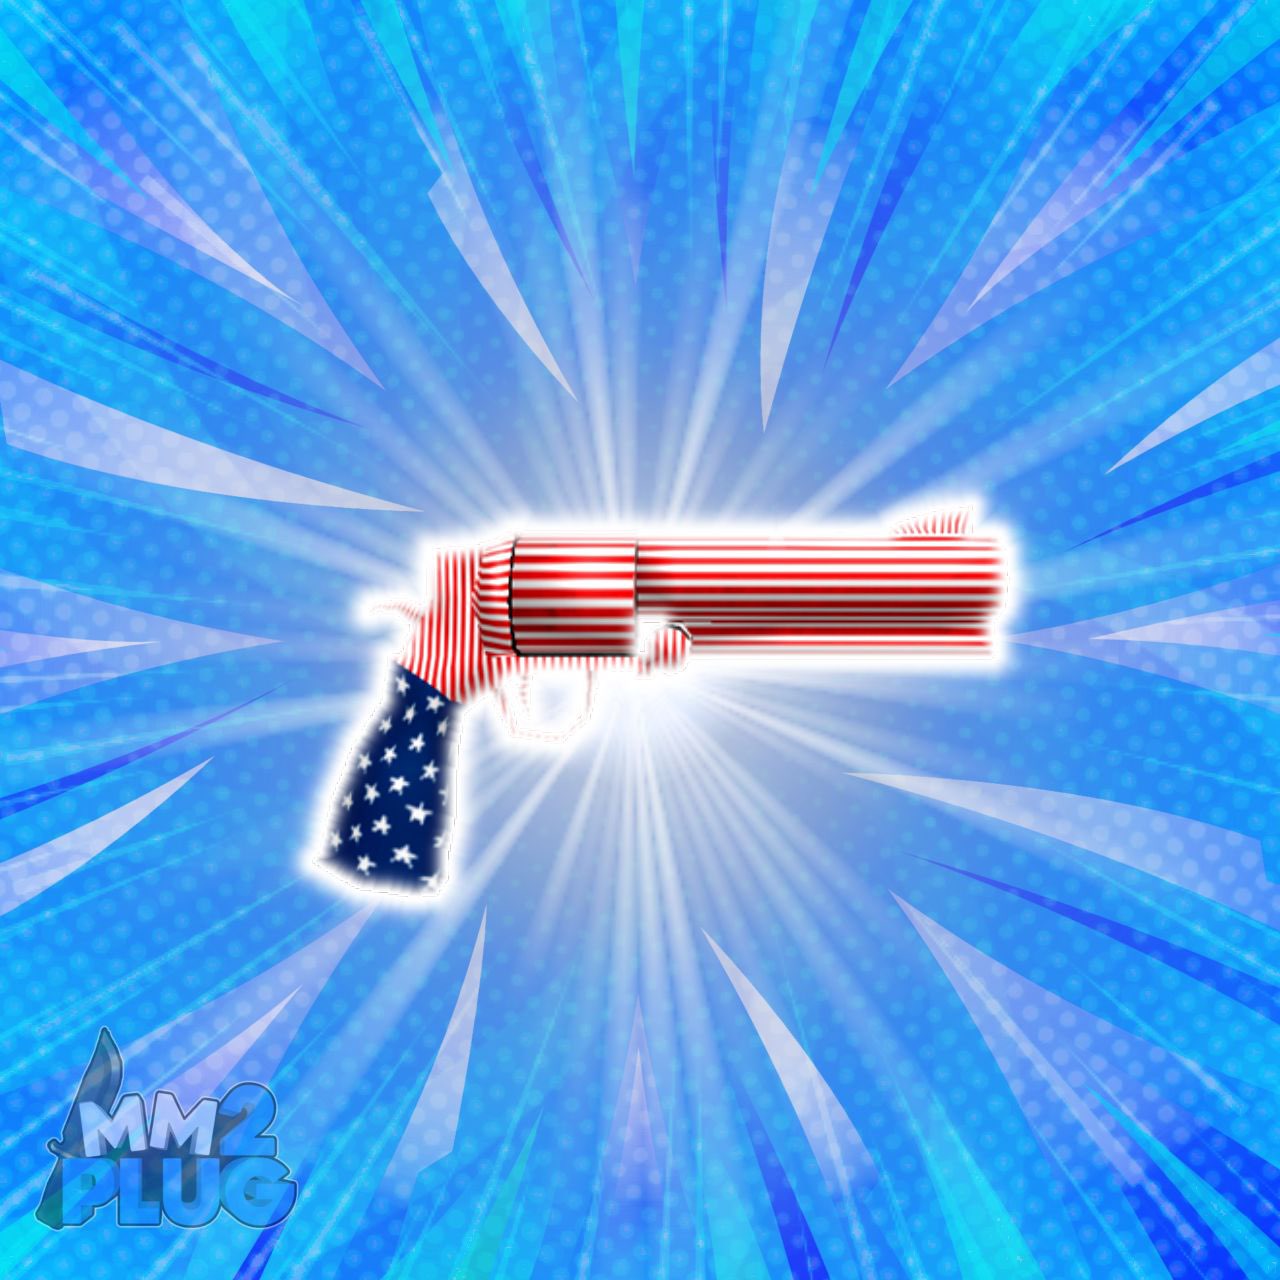 America Gun